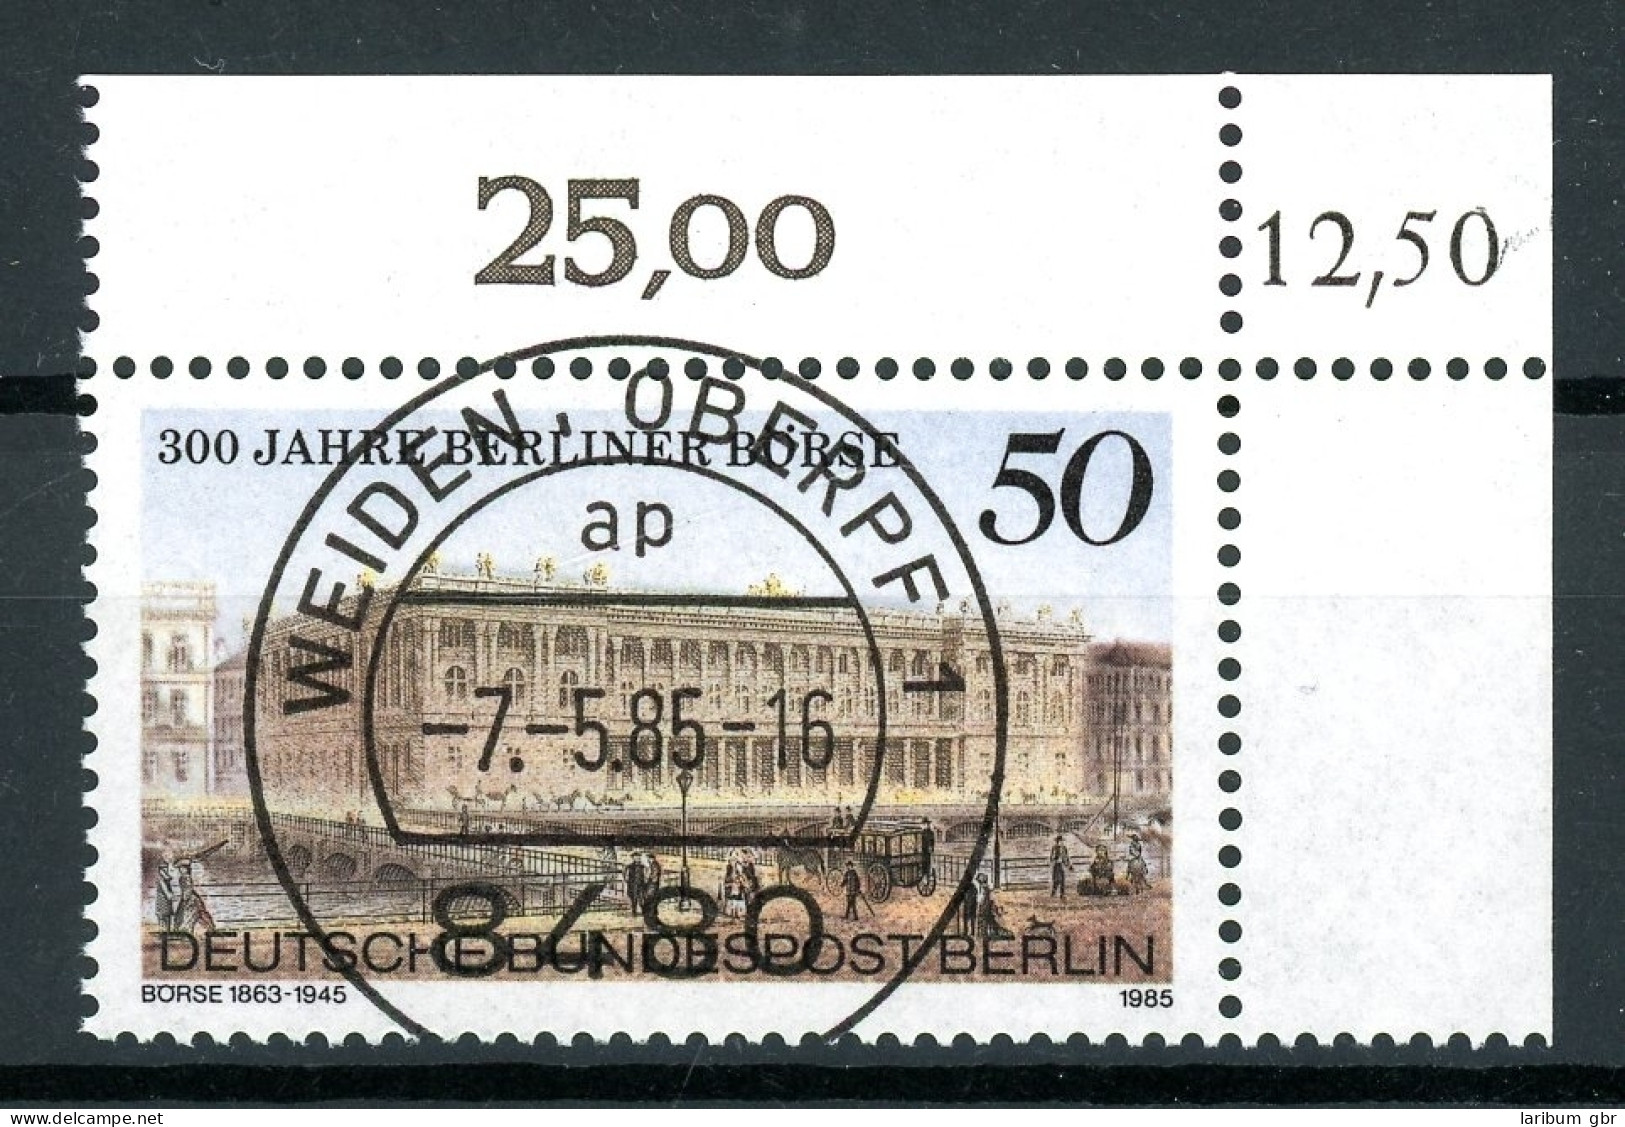 Berlin 740 KBWZ Gestempelt Weiden, Originalgummi #JJ470 - Used Stamps